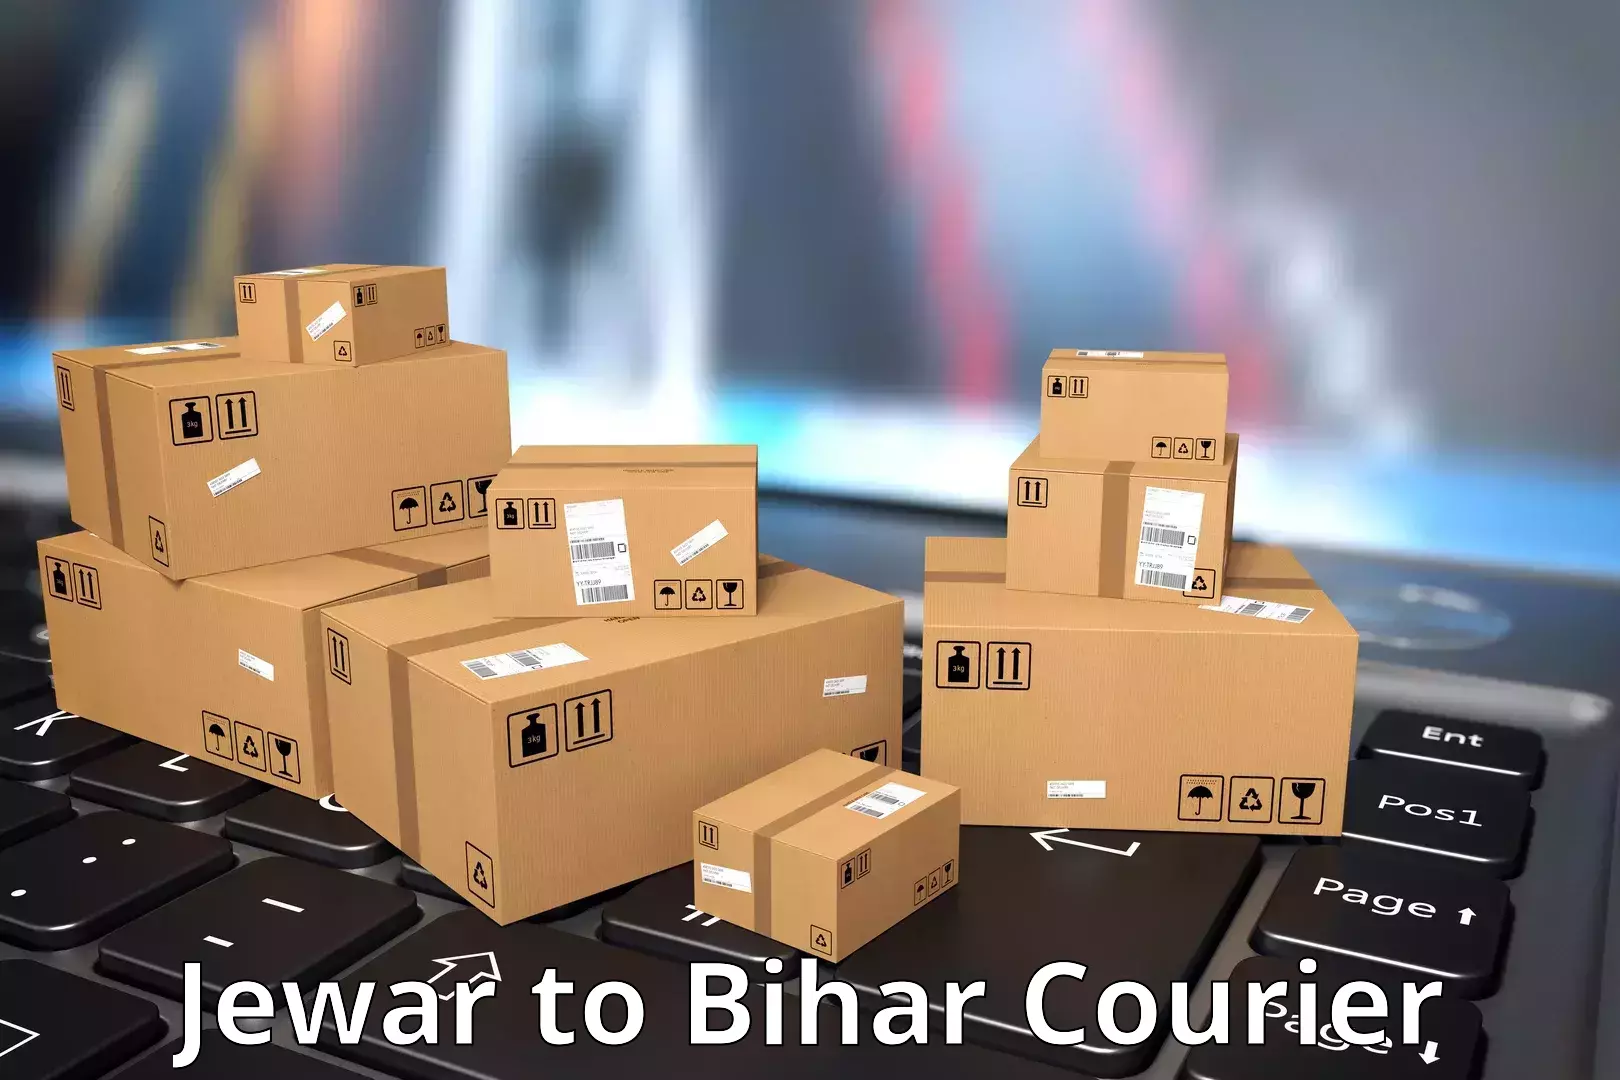 Advanced courier platforms Jewar to Dhaka